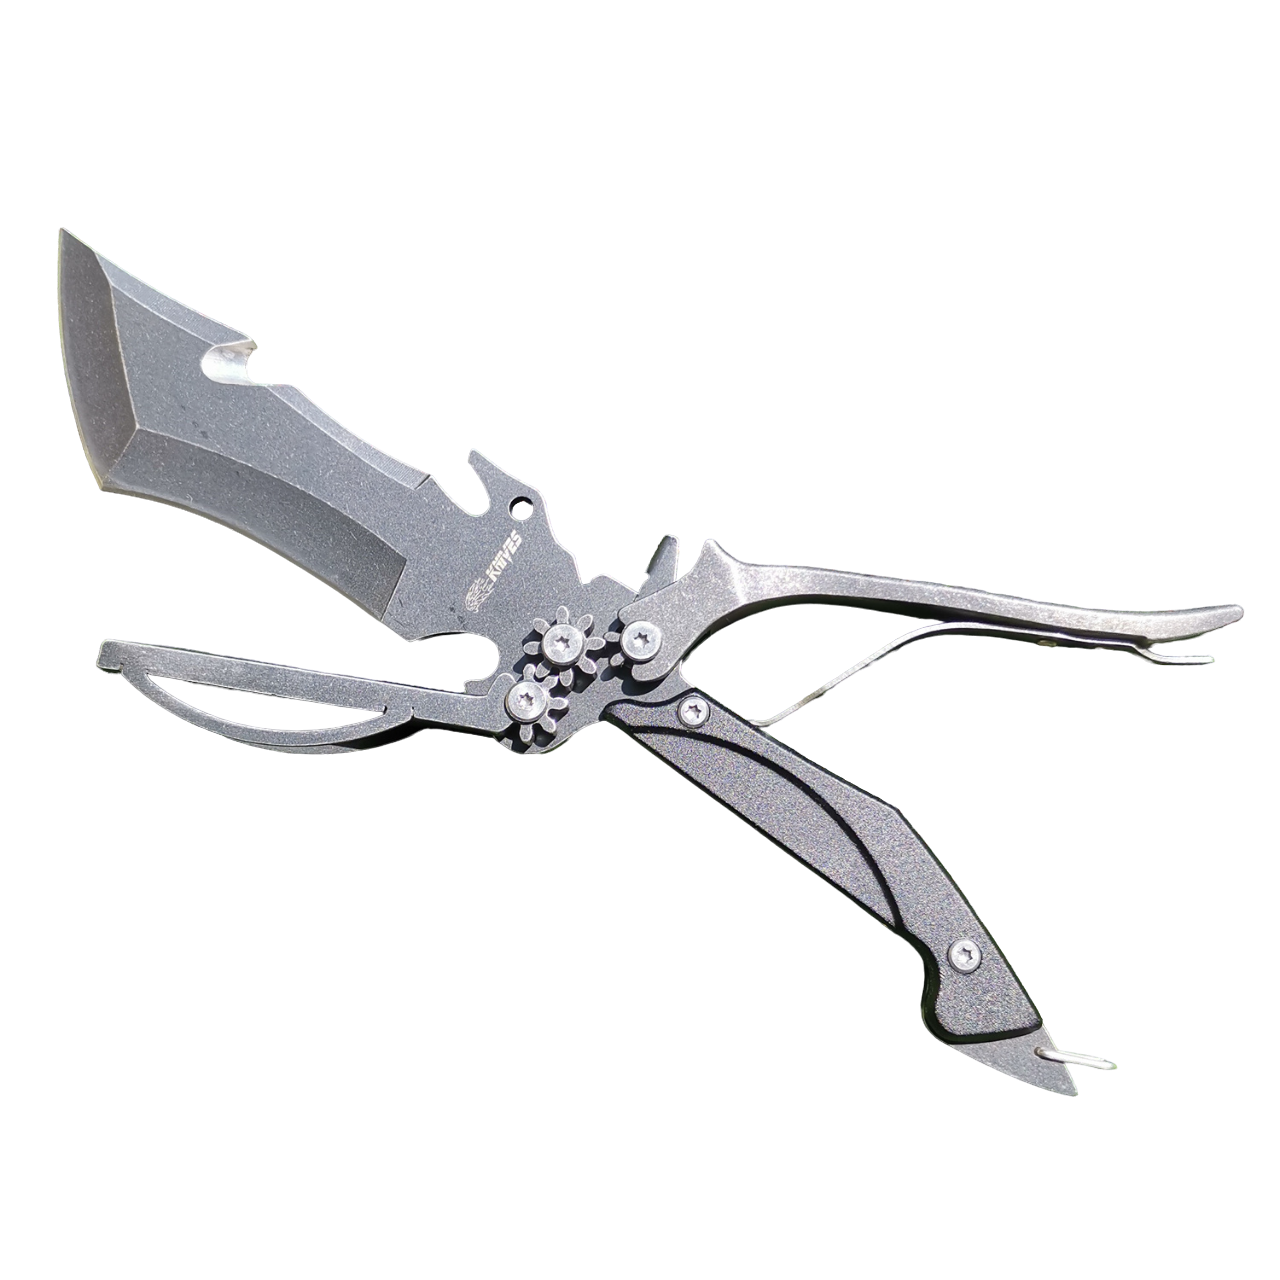 twig scissors fixed blade knife